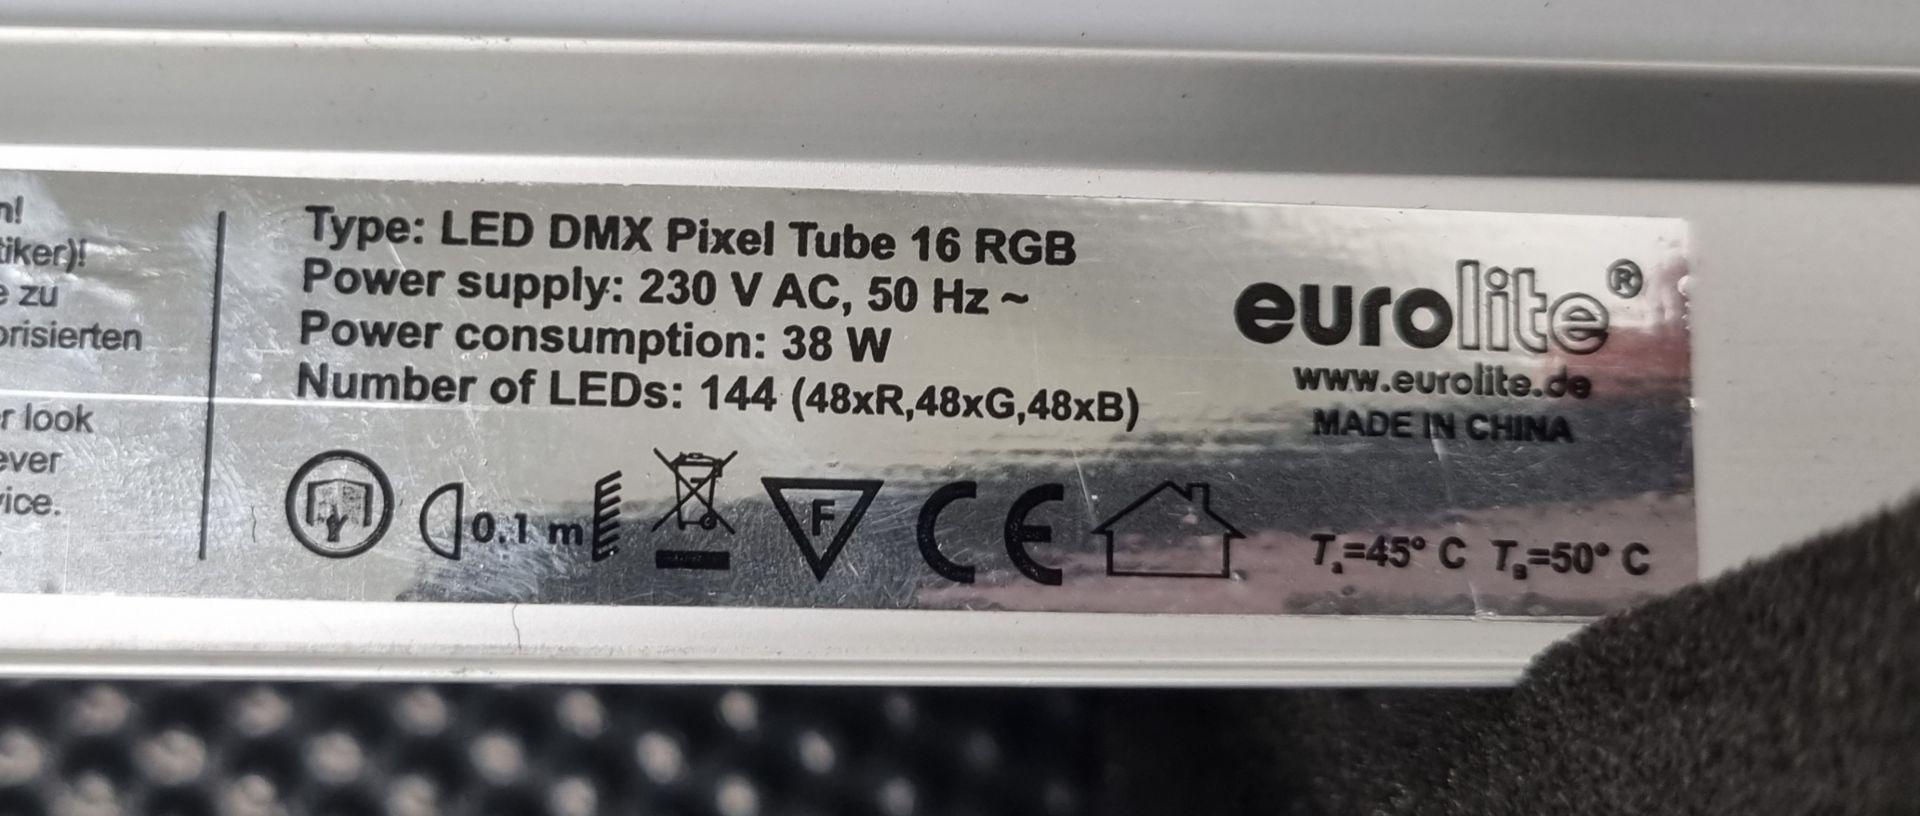 Flight case containing 24x Thomann eurolite 1m LED DMX pixel tubes 16RGB 144 LEDs - L1090 x W680 - Image 3 of 4